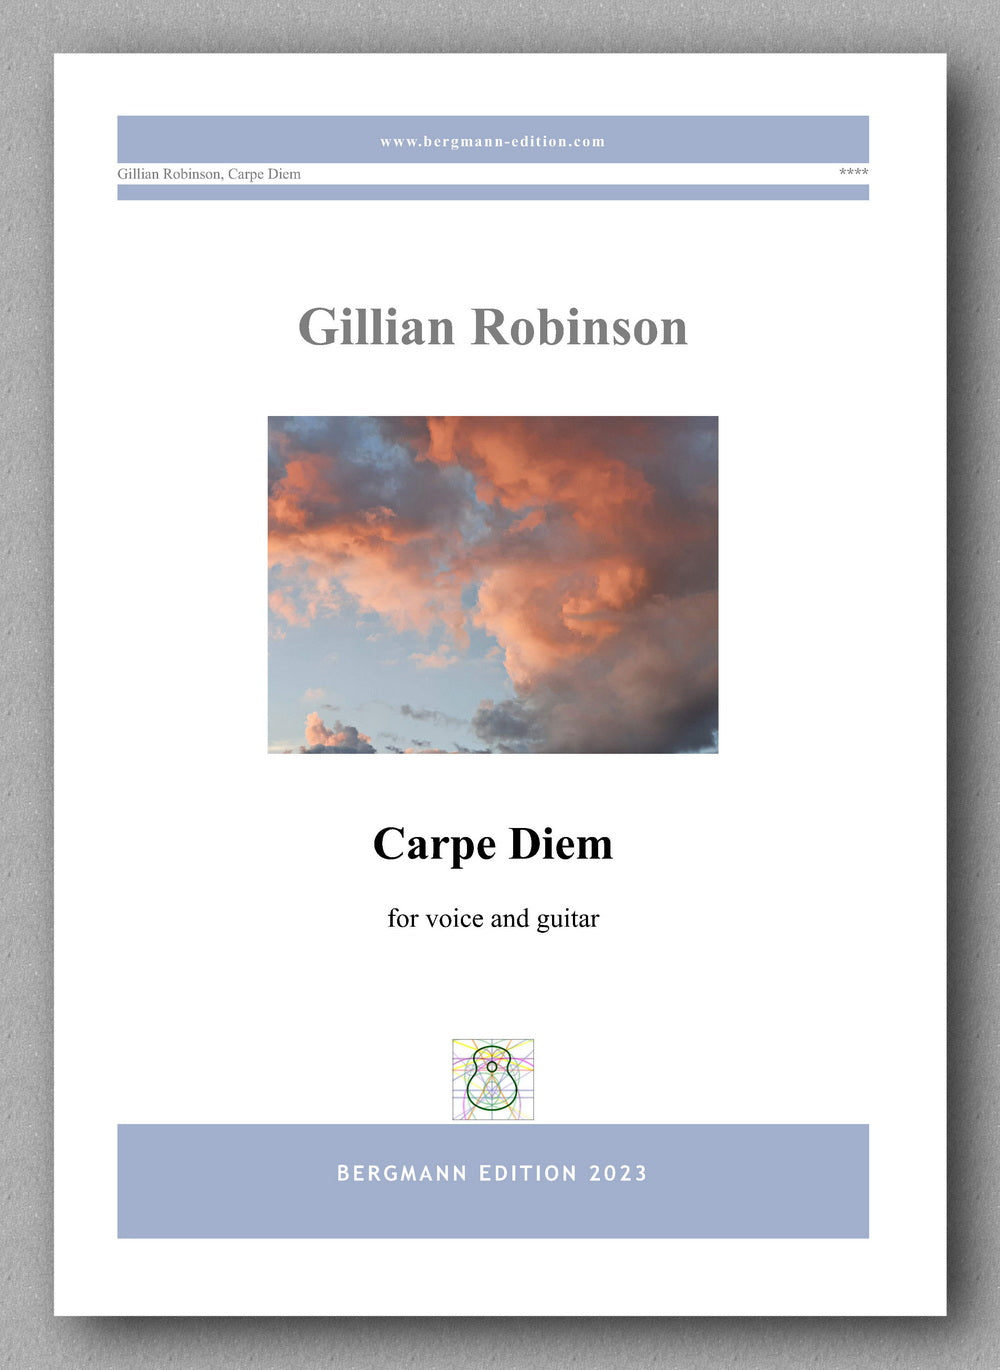 Robinson, Carpe Diem - preview of the cover